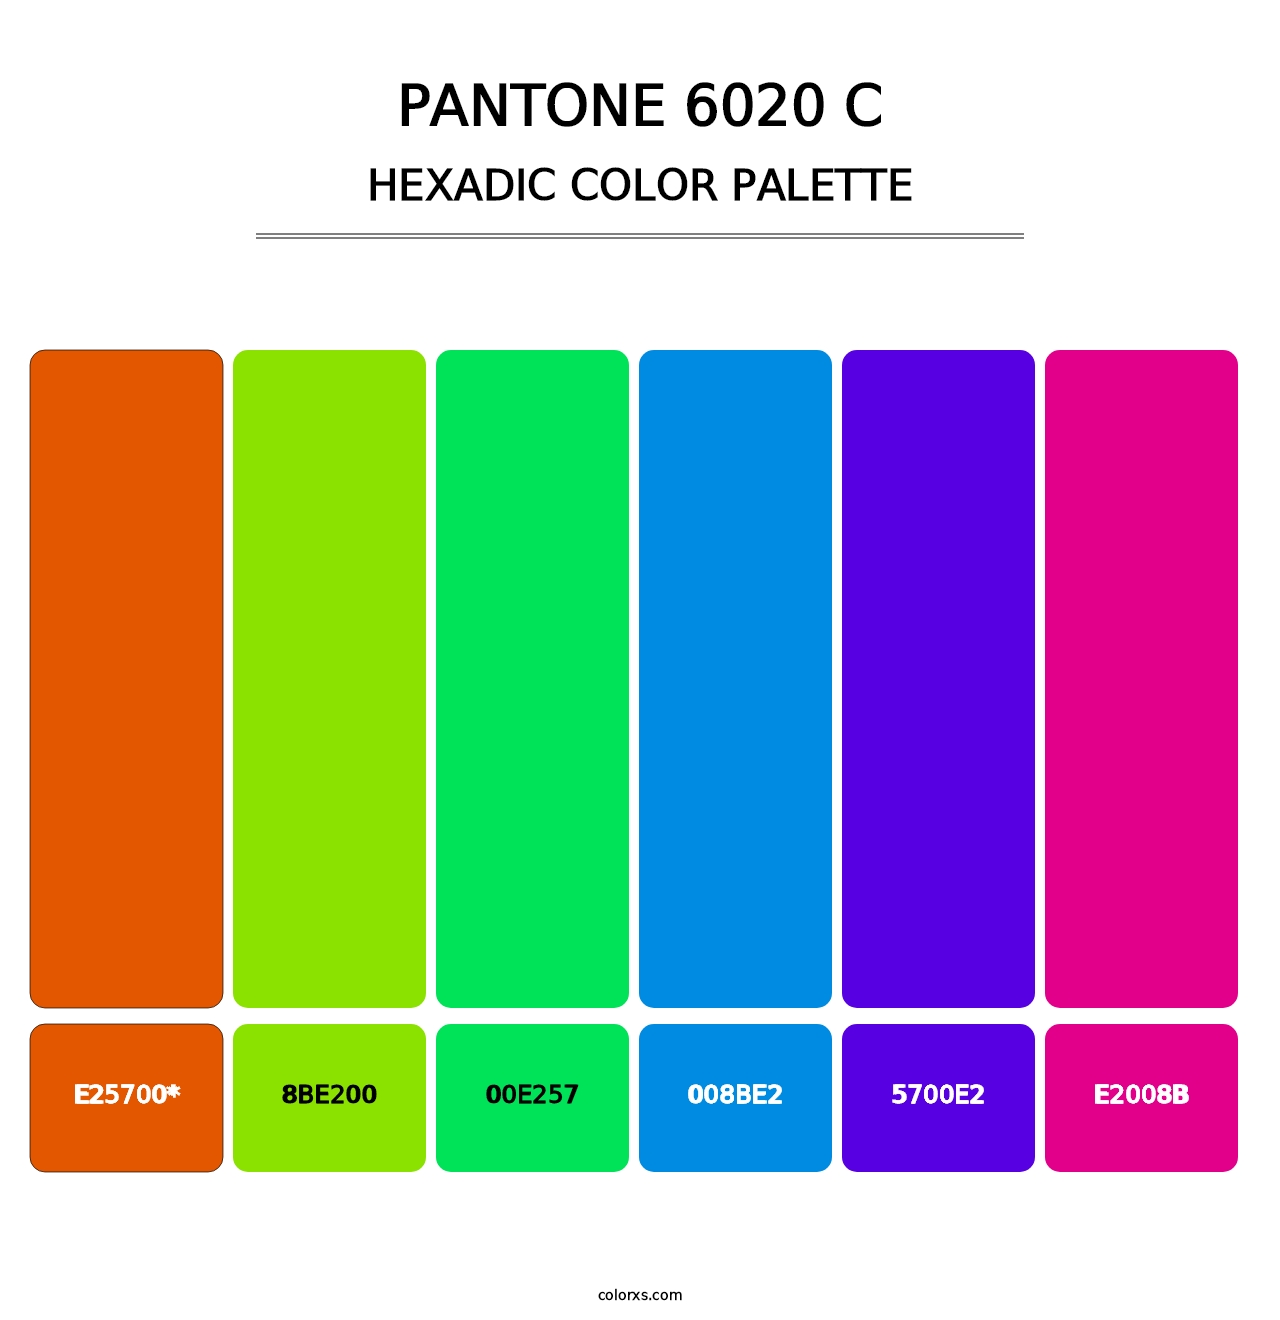 PANTONE 6020 C - Hexadic Color Palette